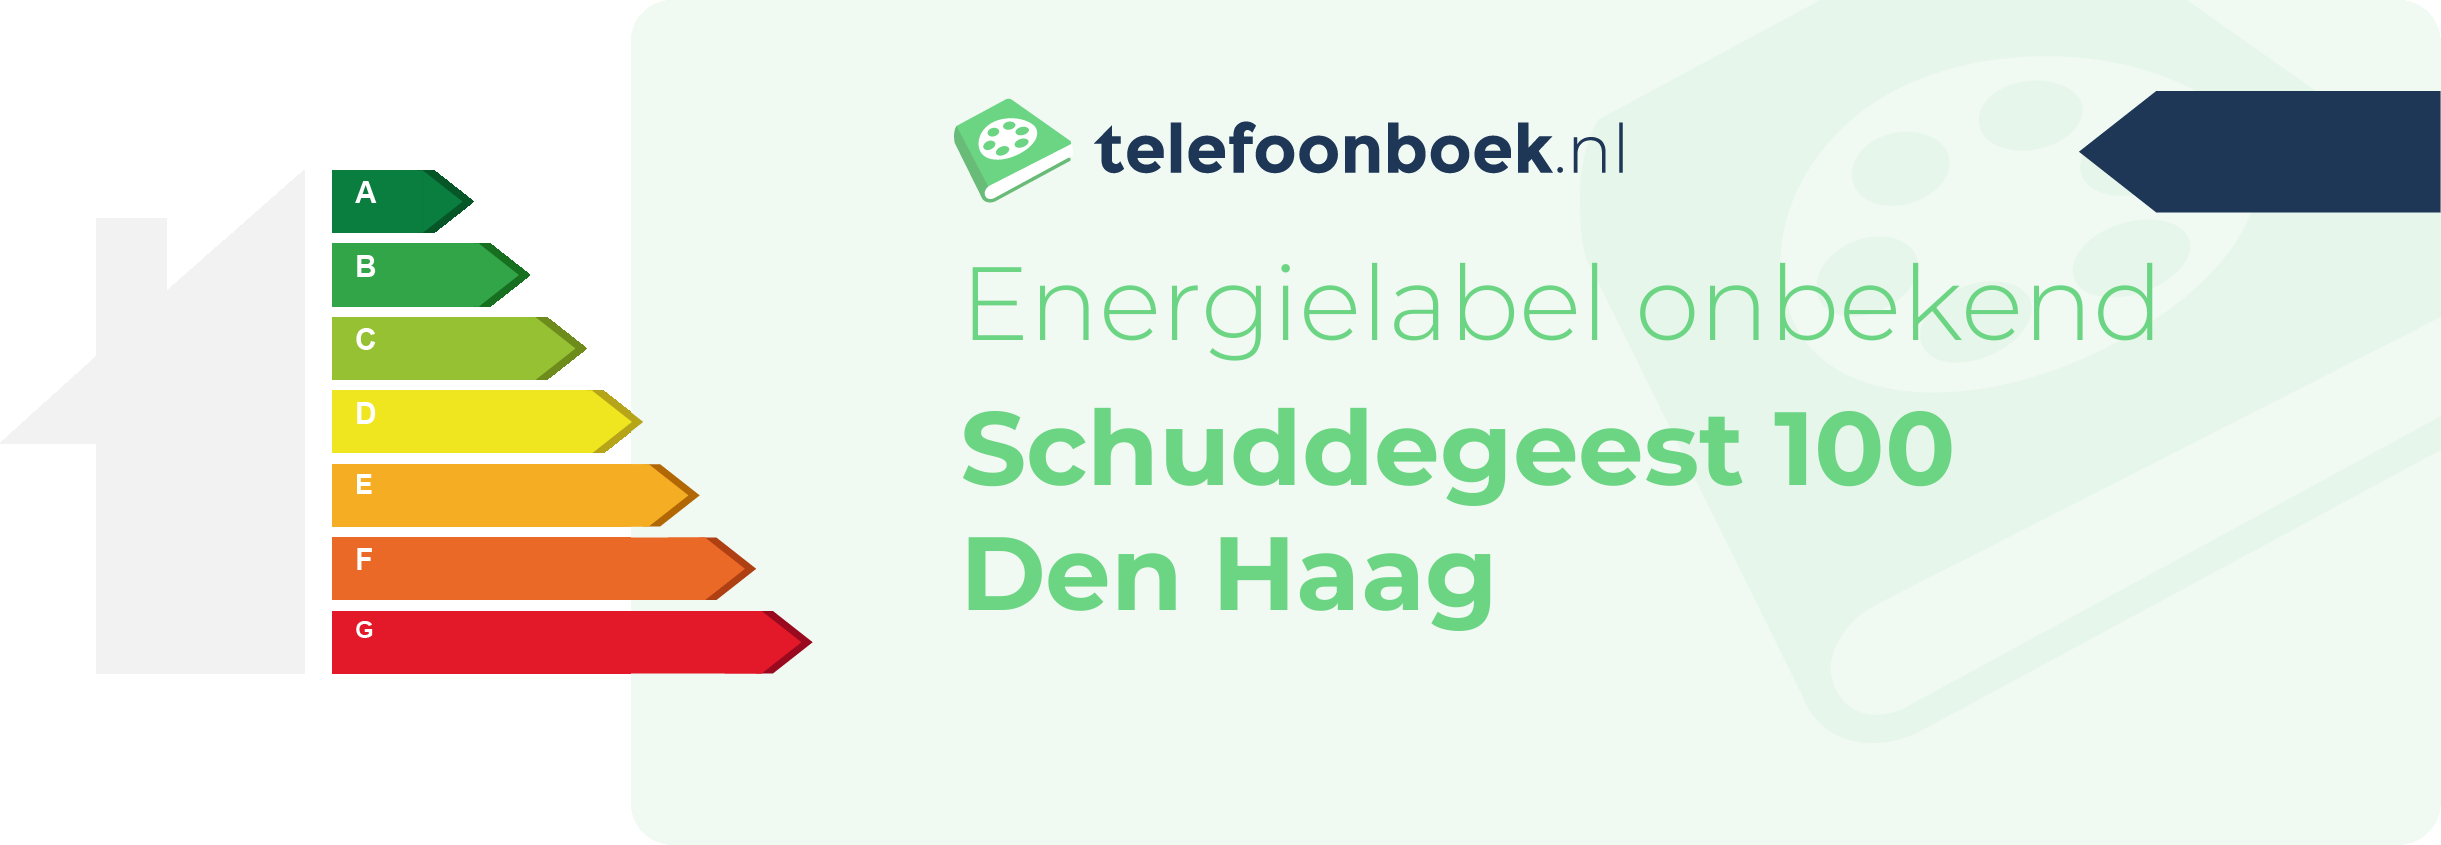 Energielabel Schuddegeest 100 Den Haag